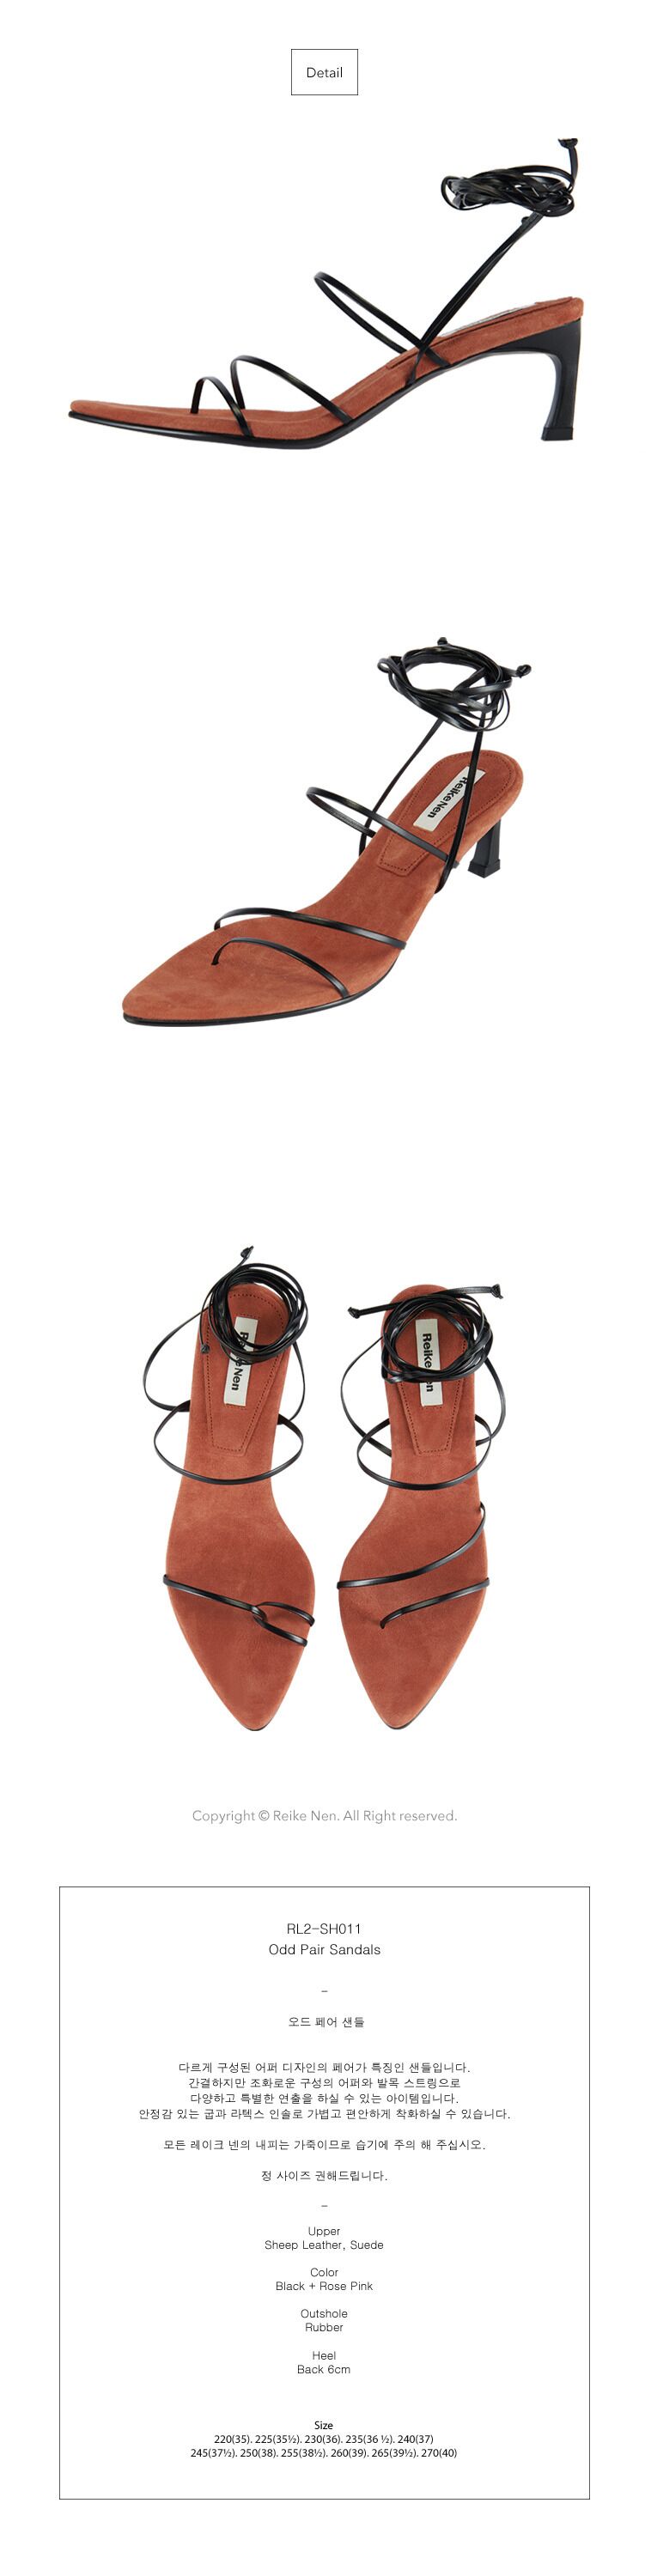 Reike Nen레이크넨]RL2-SH011 / Odd Pair Sandals